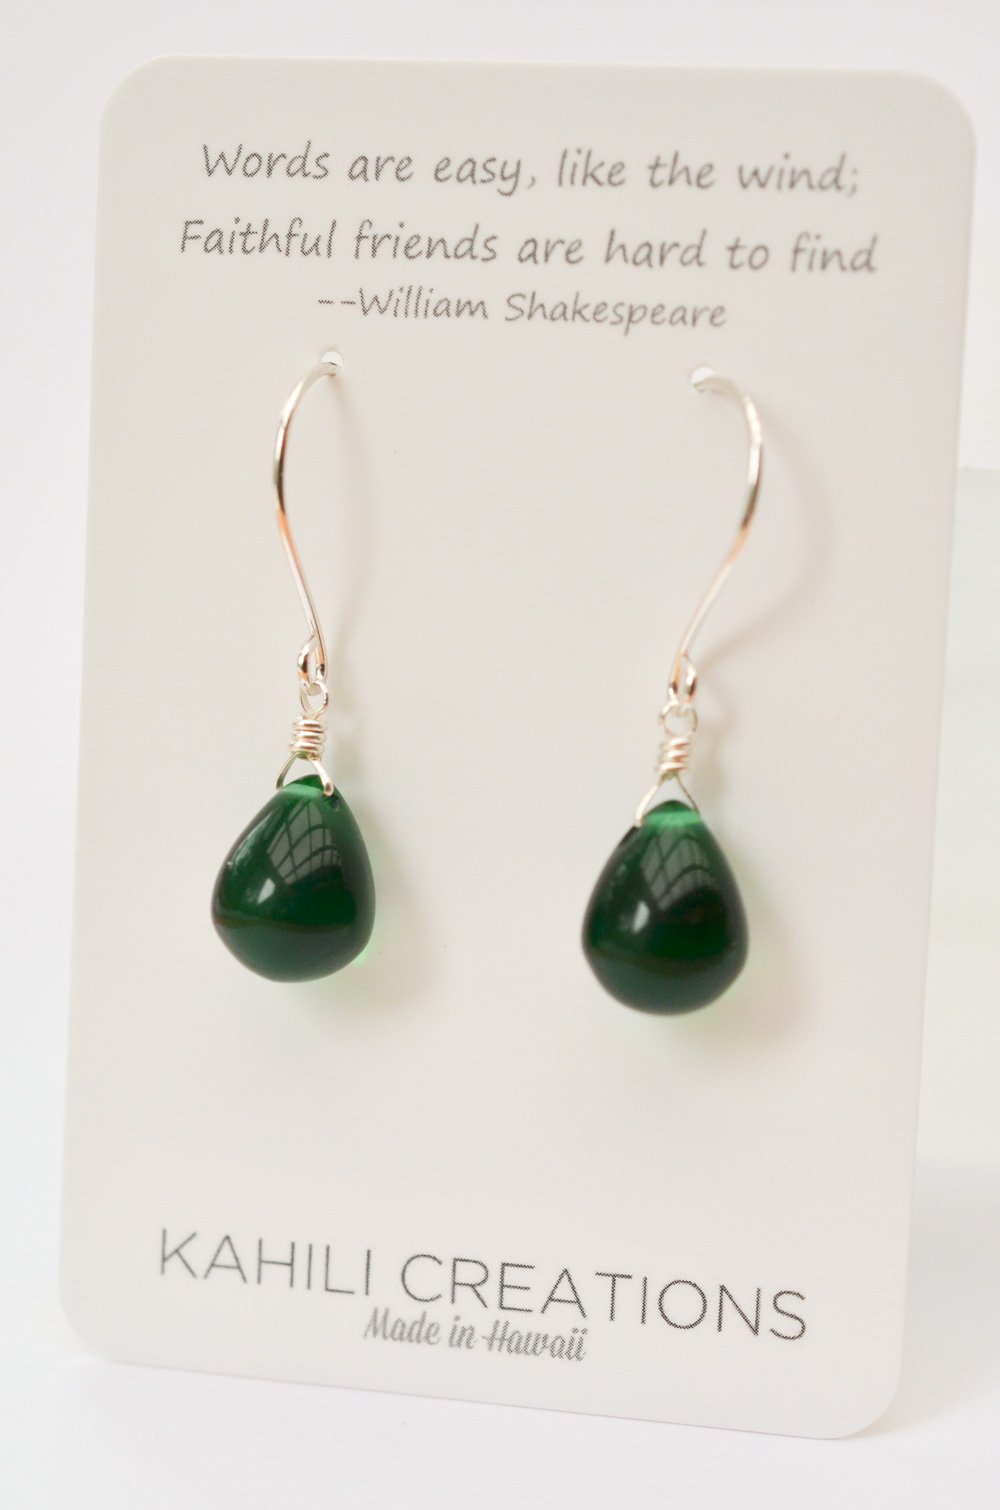 Image of Emerald green glass drop earrings